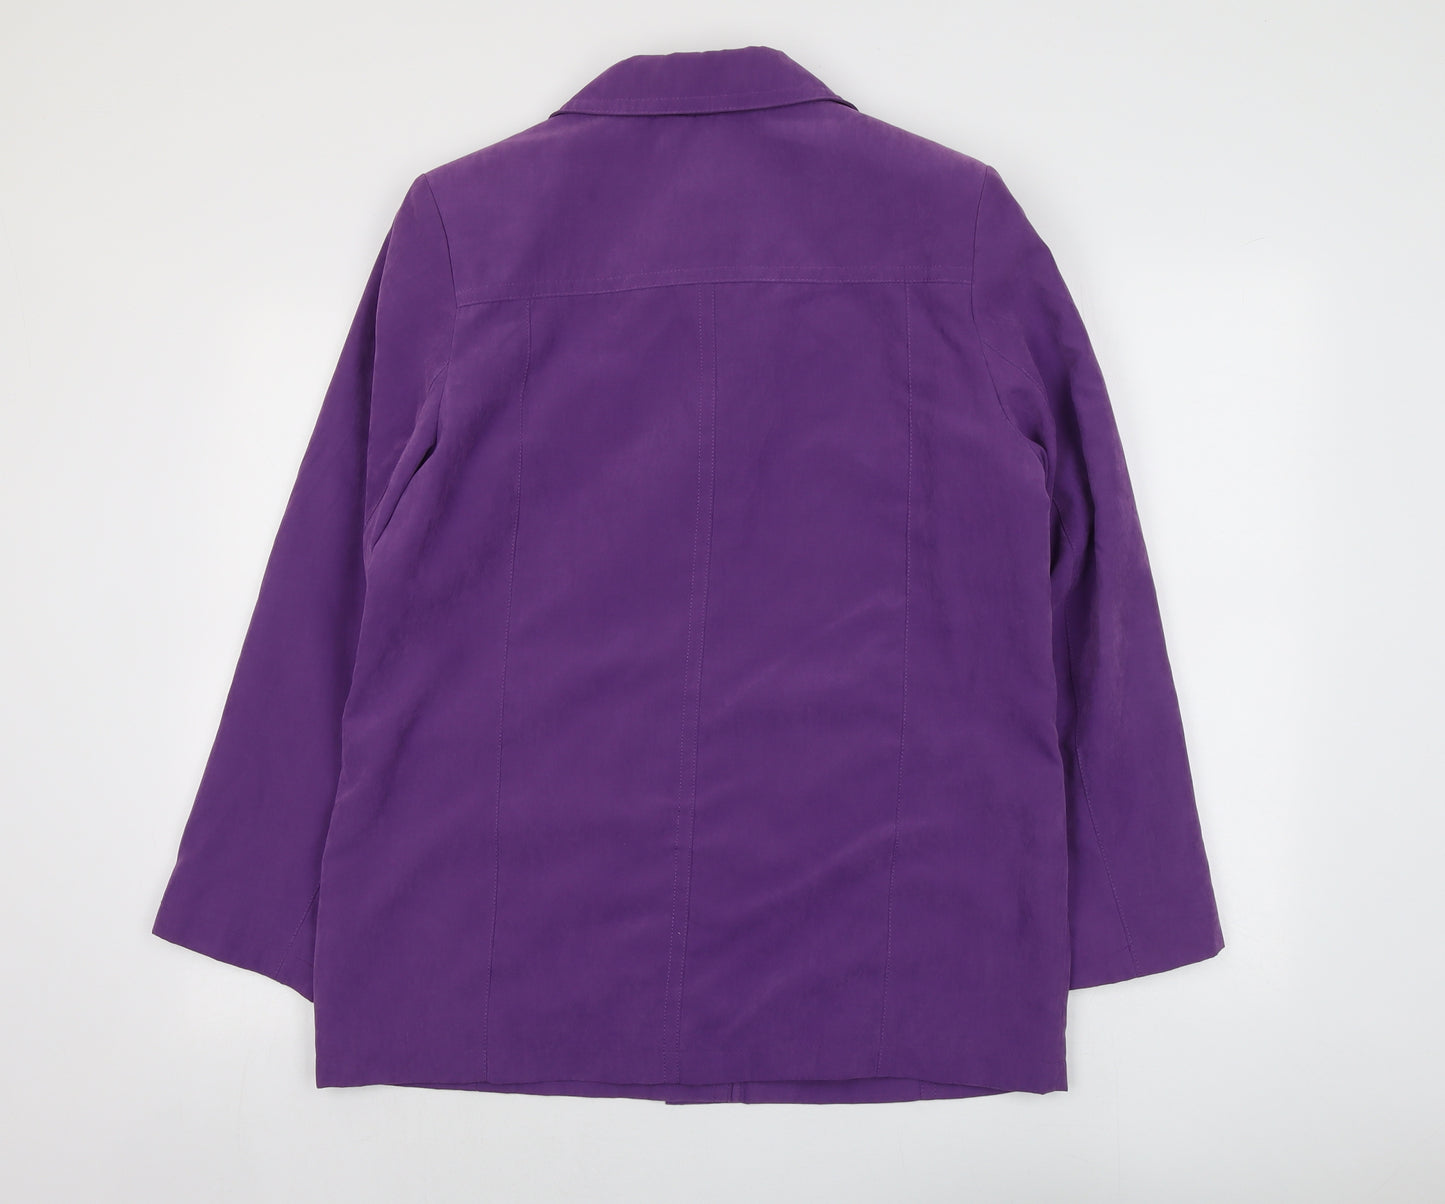 EWM Womens Purple Pea Coat Coat Size 12 Button